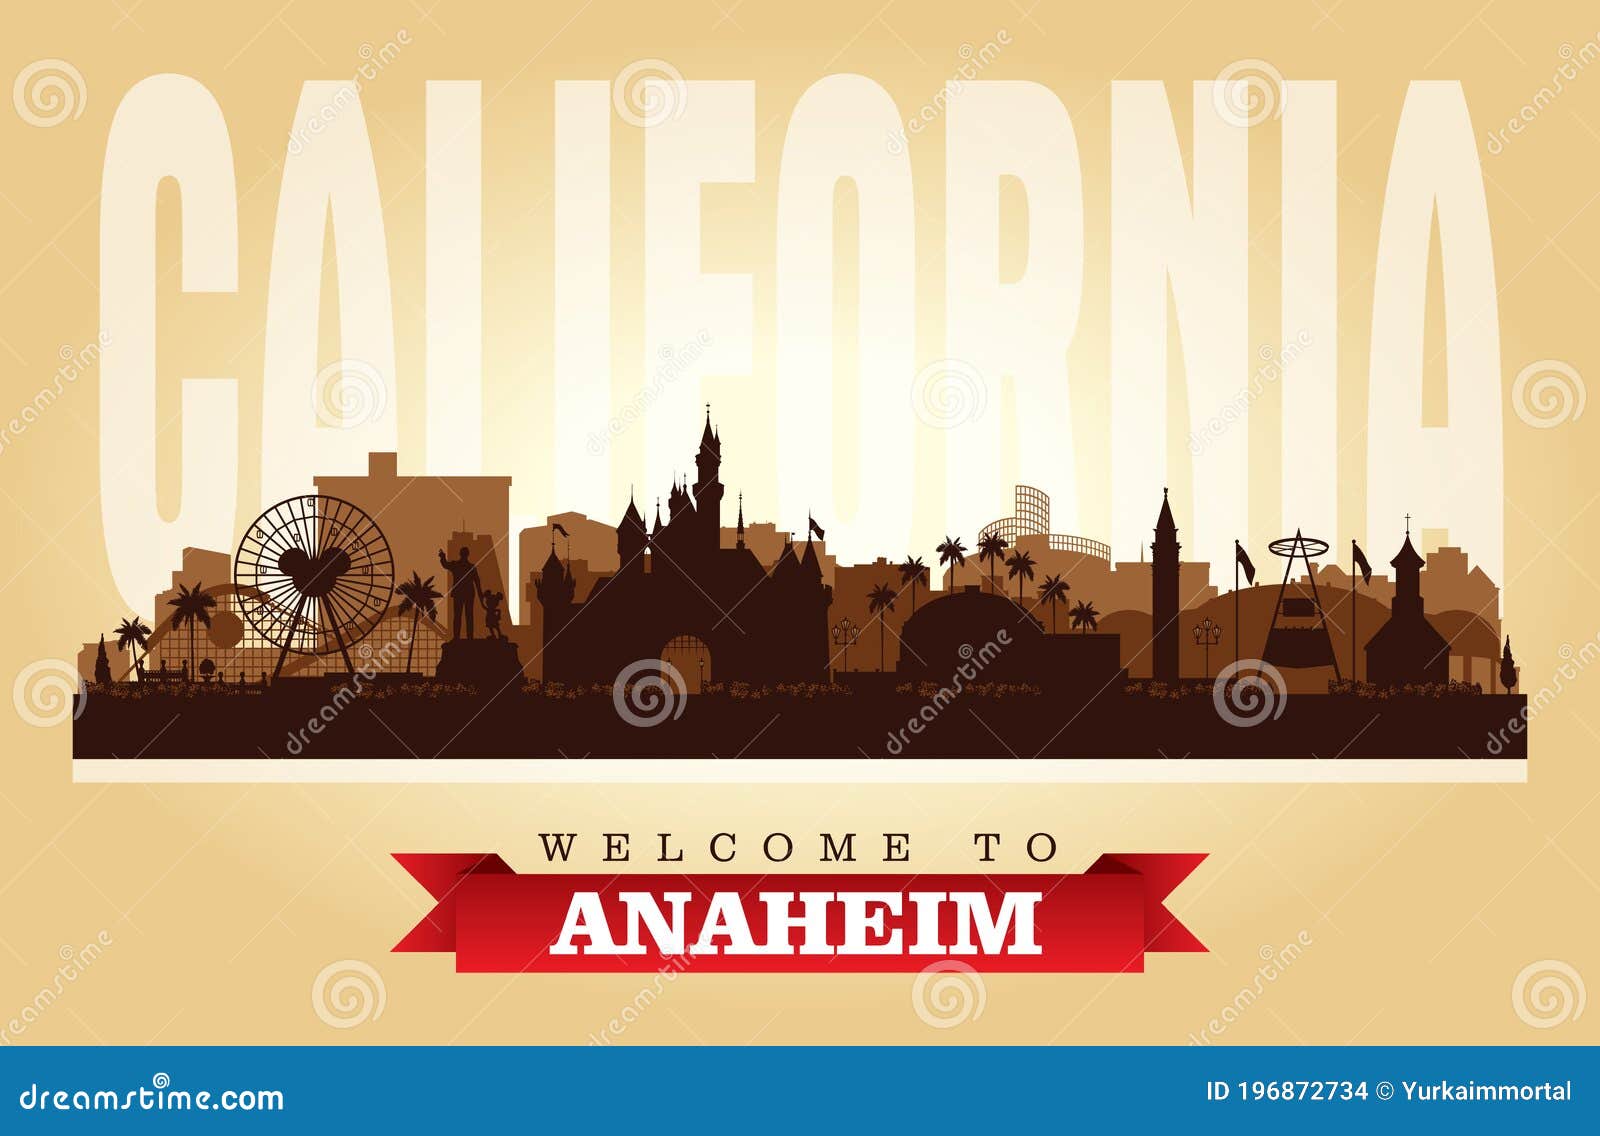 anaheim california city skyline  silhouette